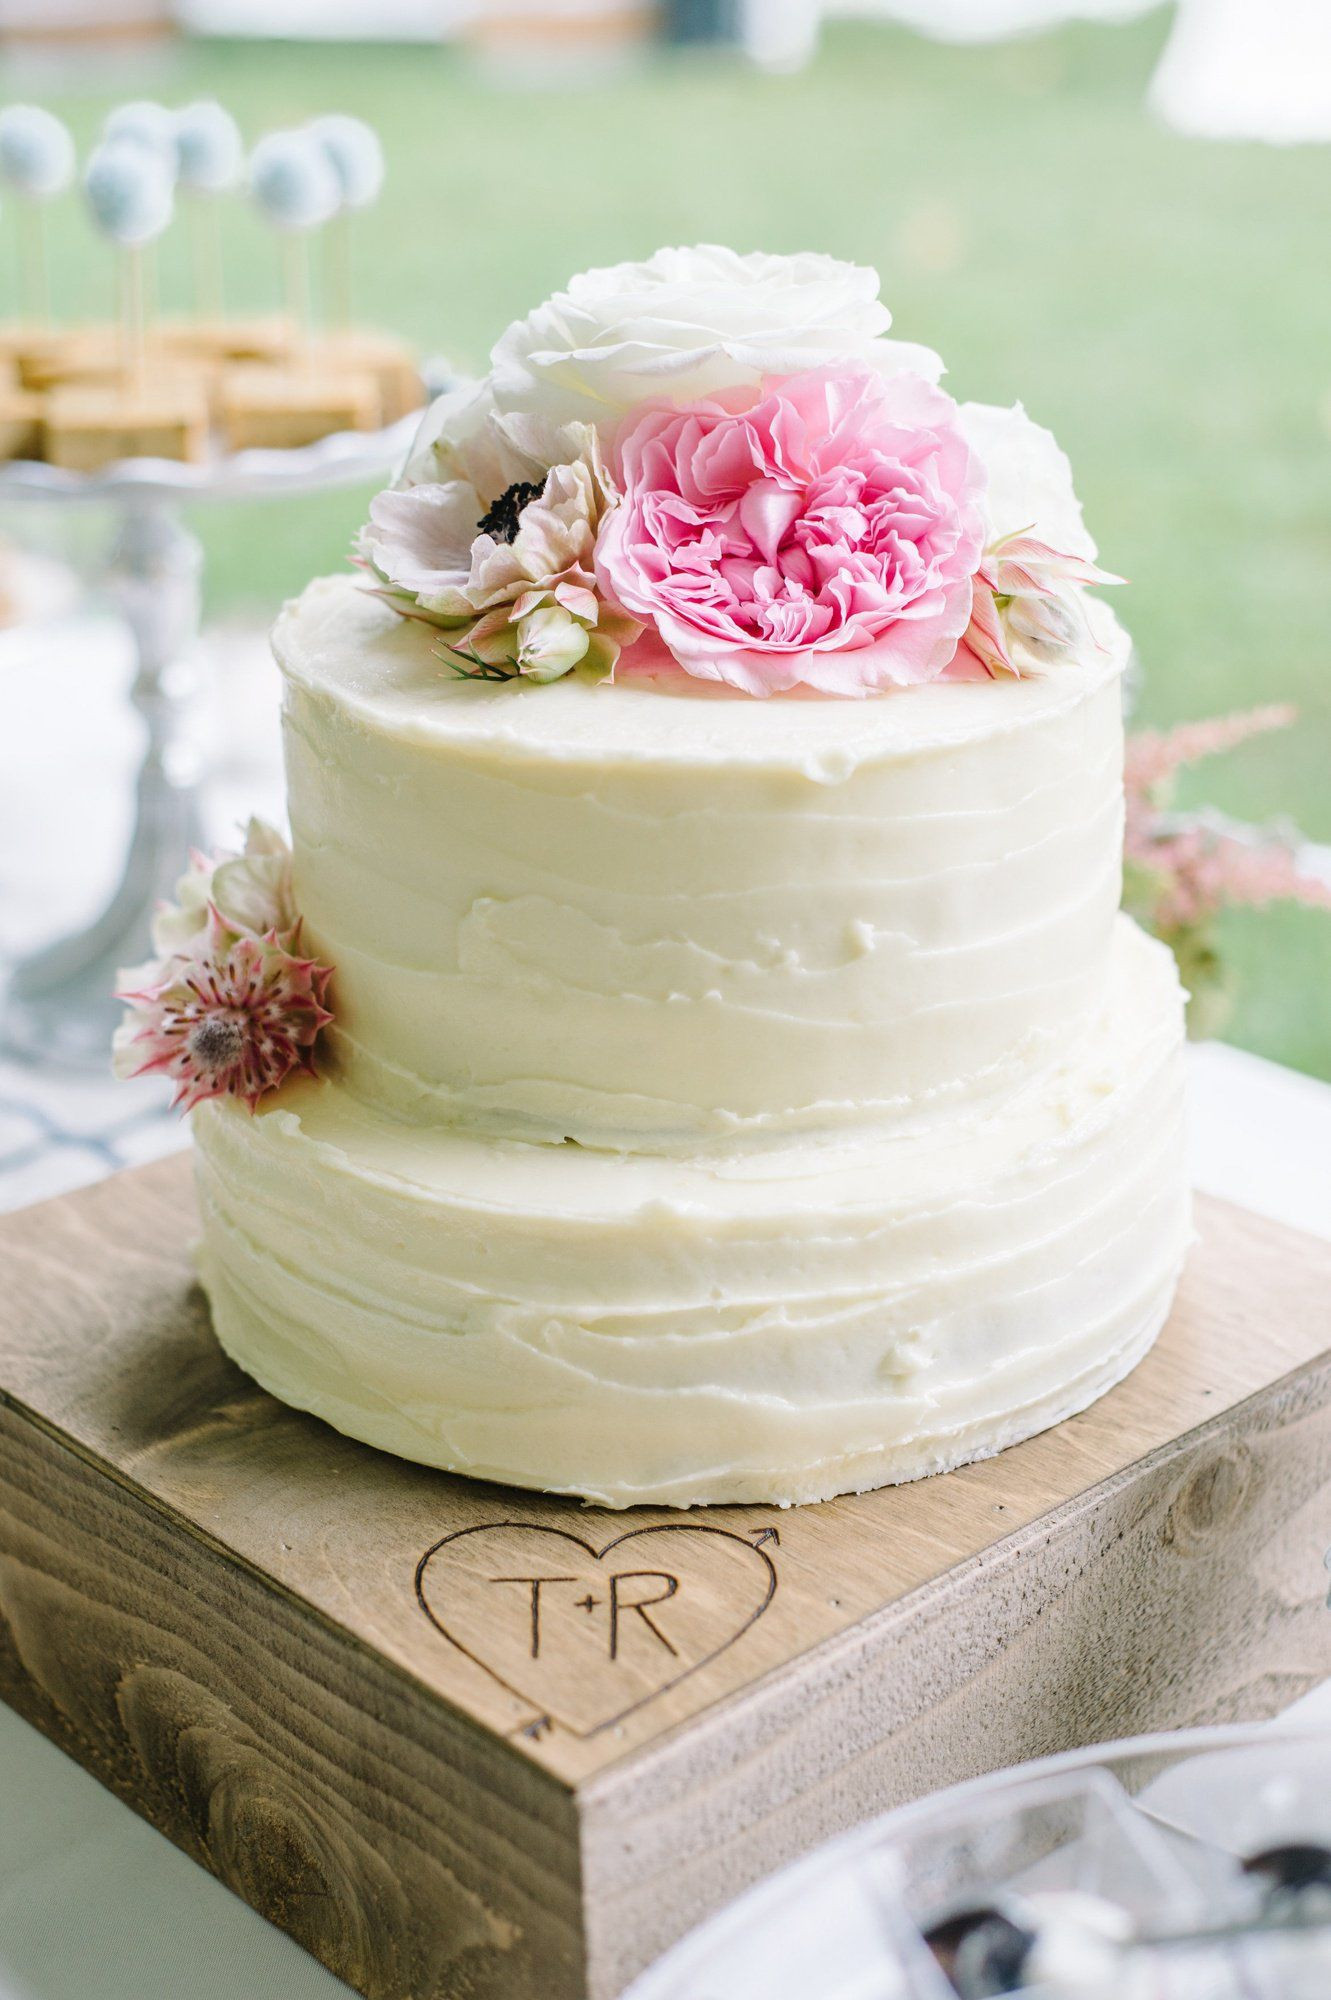 2 Tier Wedding Cakes Buttercream
 Two Tier Buttercream Wedding Cake